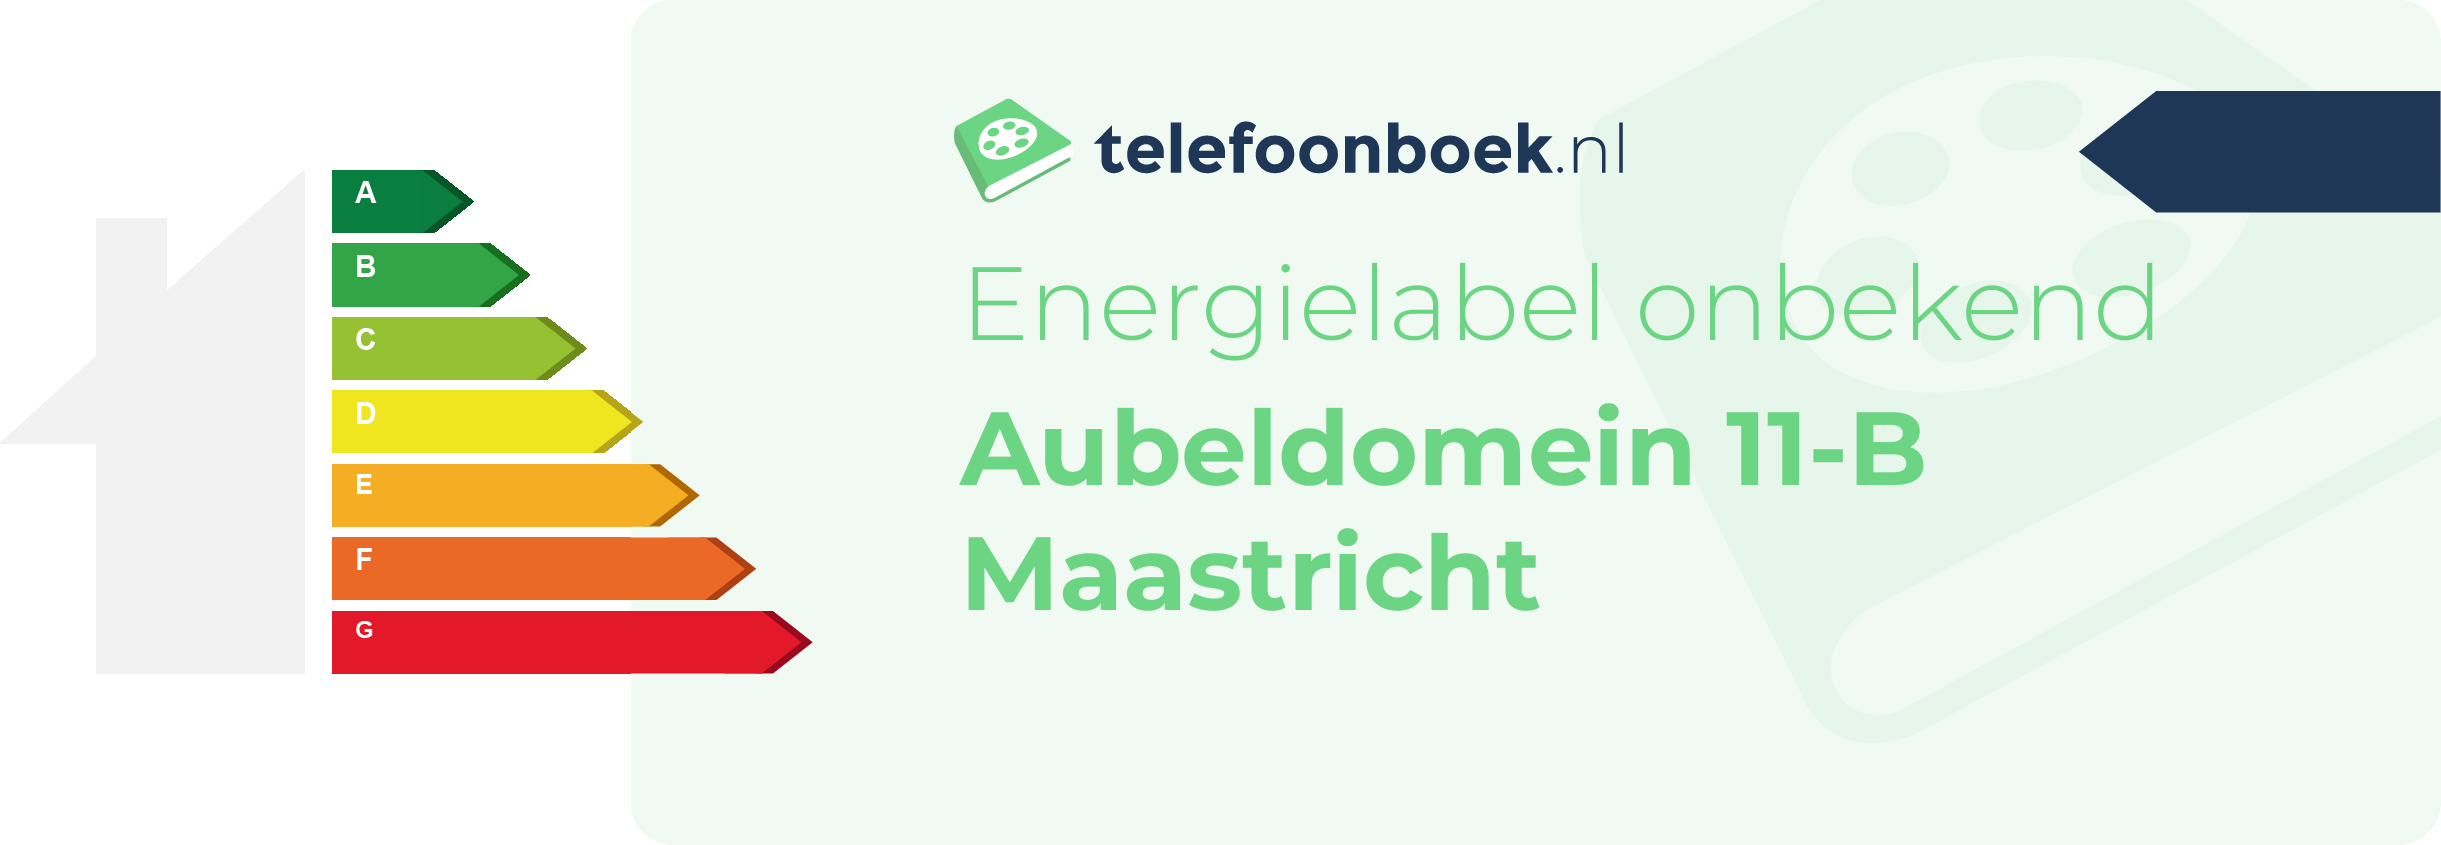 Energielabel Aubeldomein 11-B Maastricht